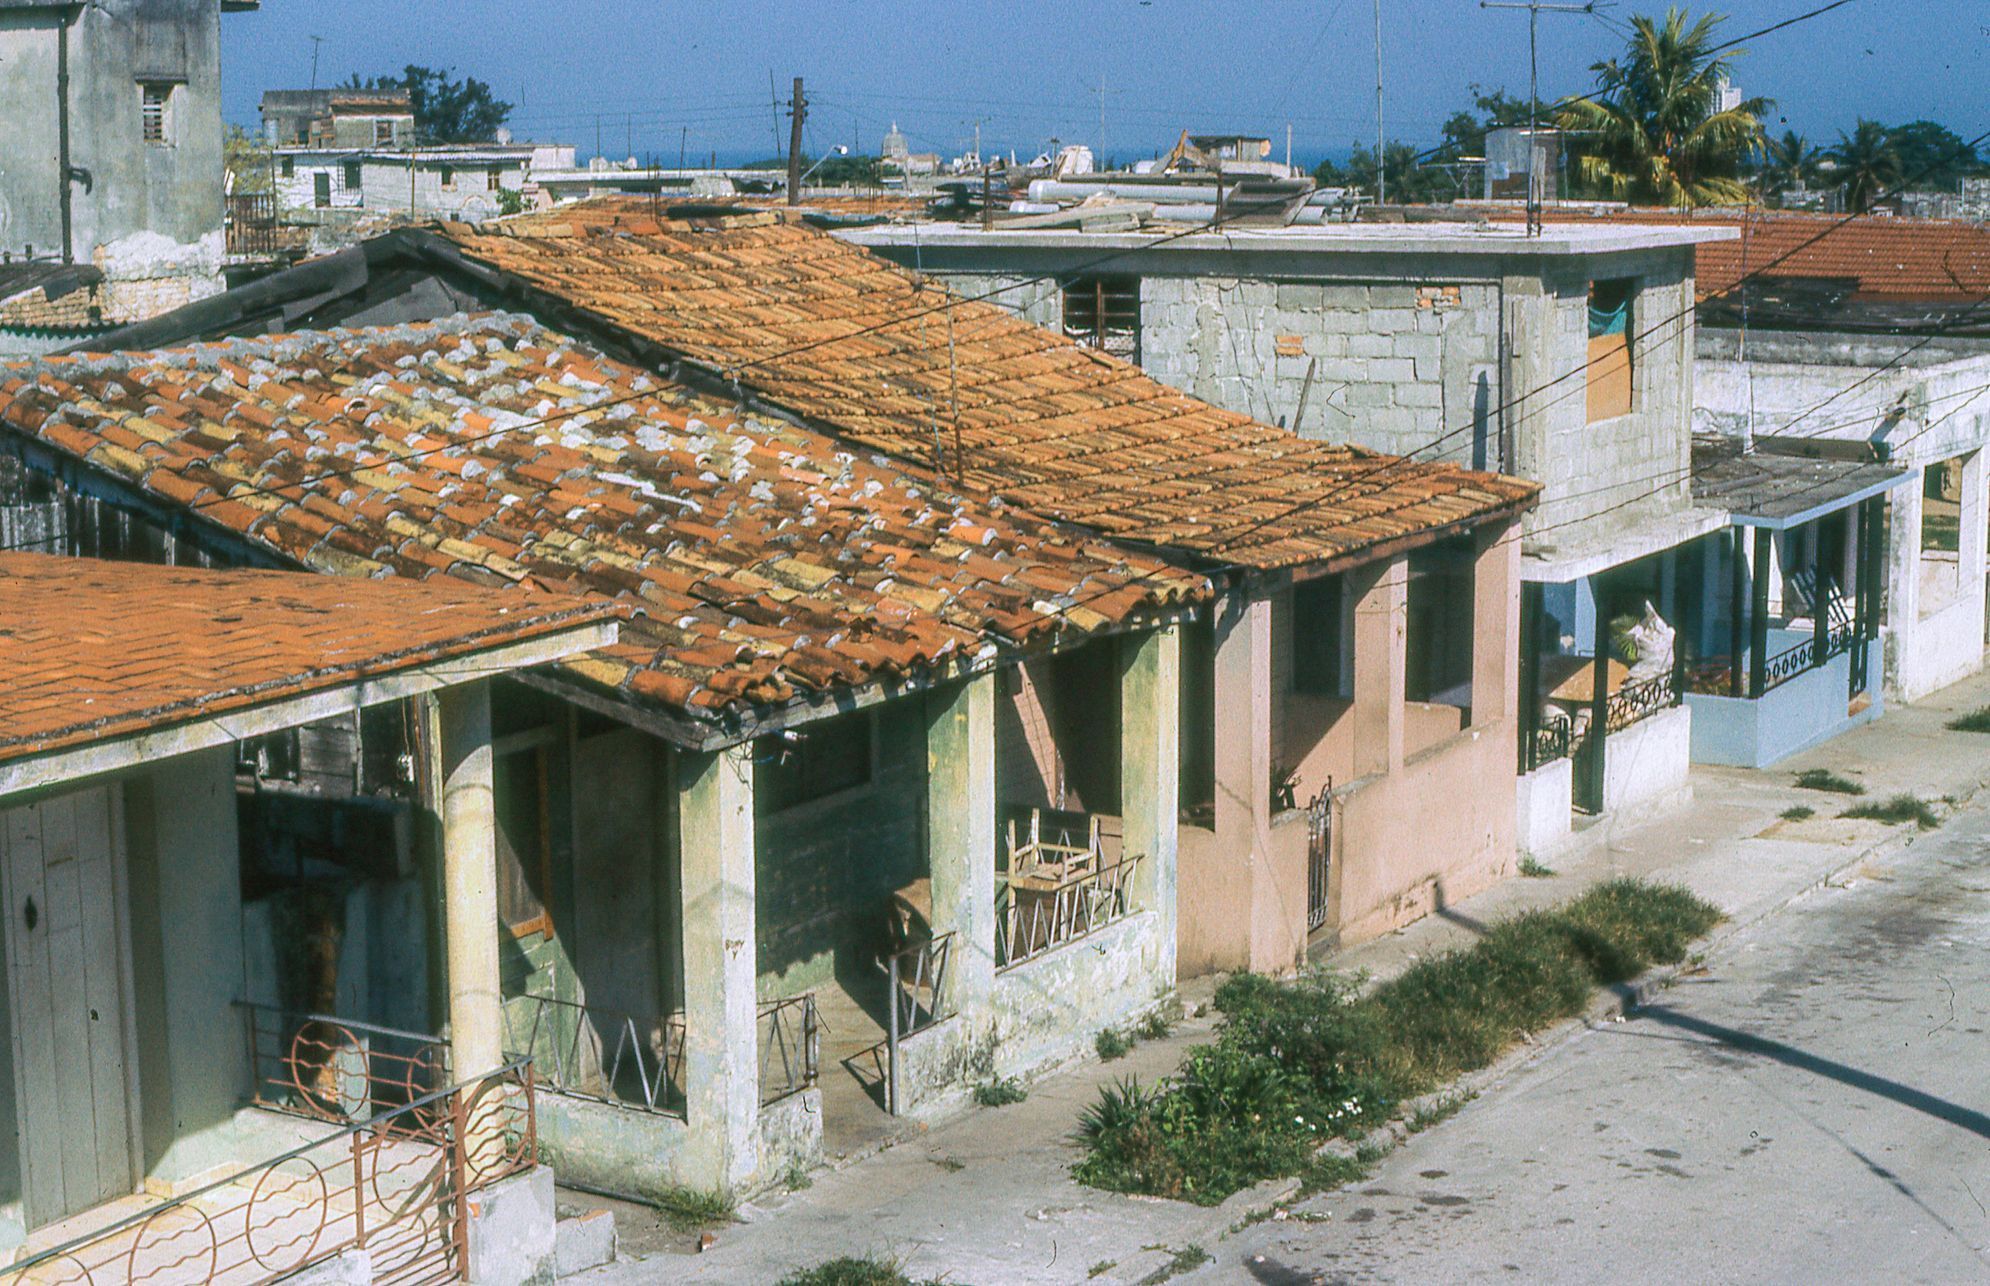 Kuba, rok 1989, Petr Levinský, Zahraničí, vol. 1